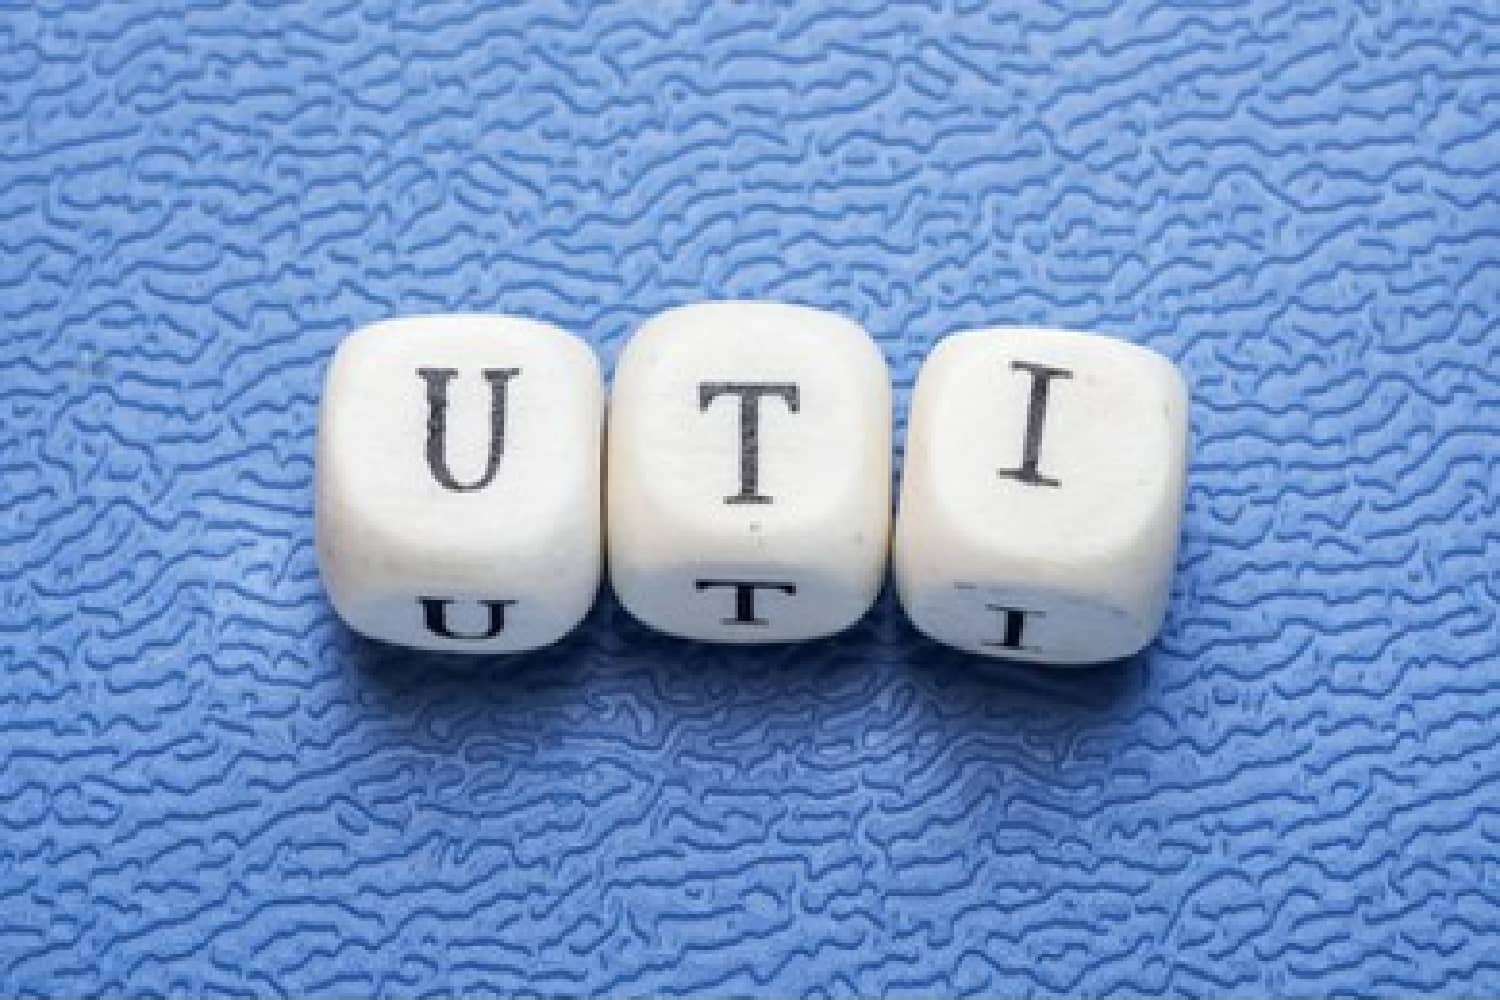 Types of UTI